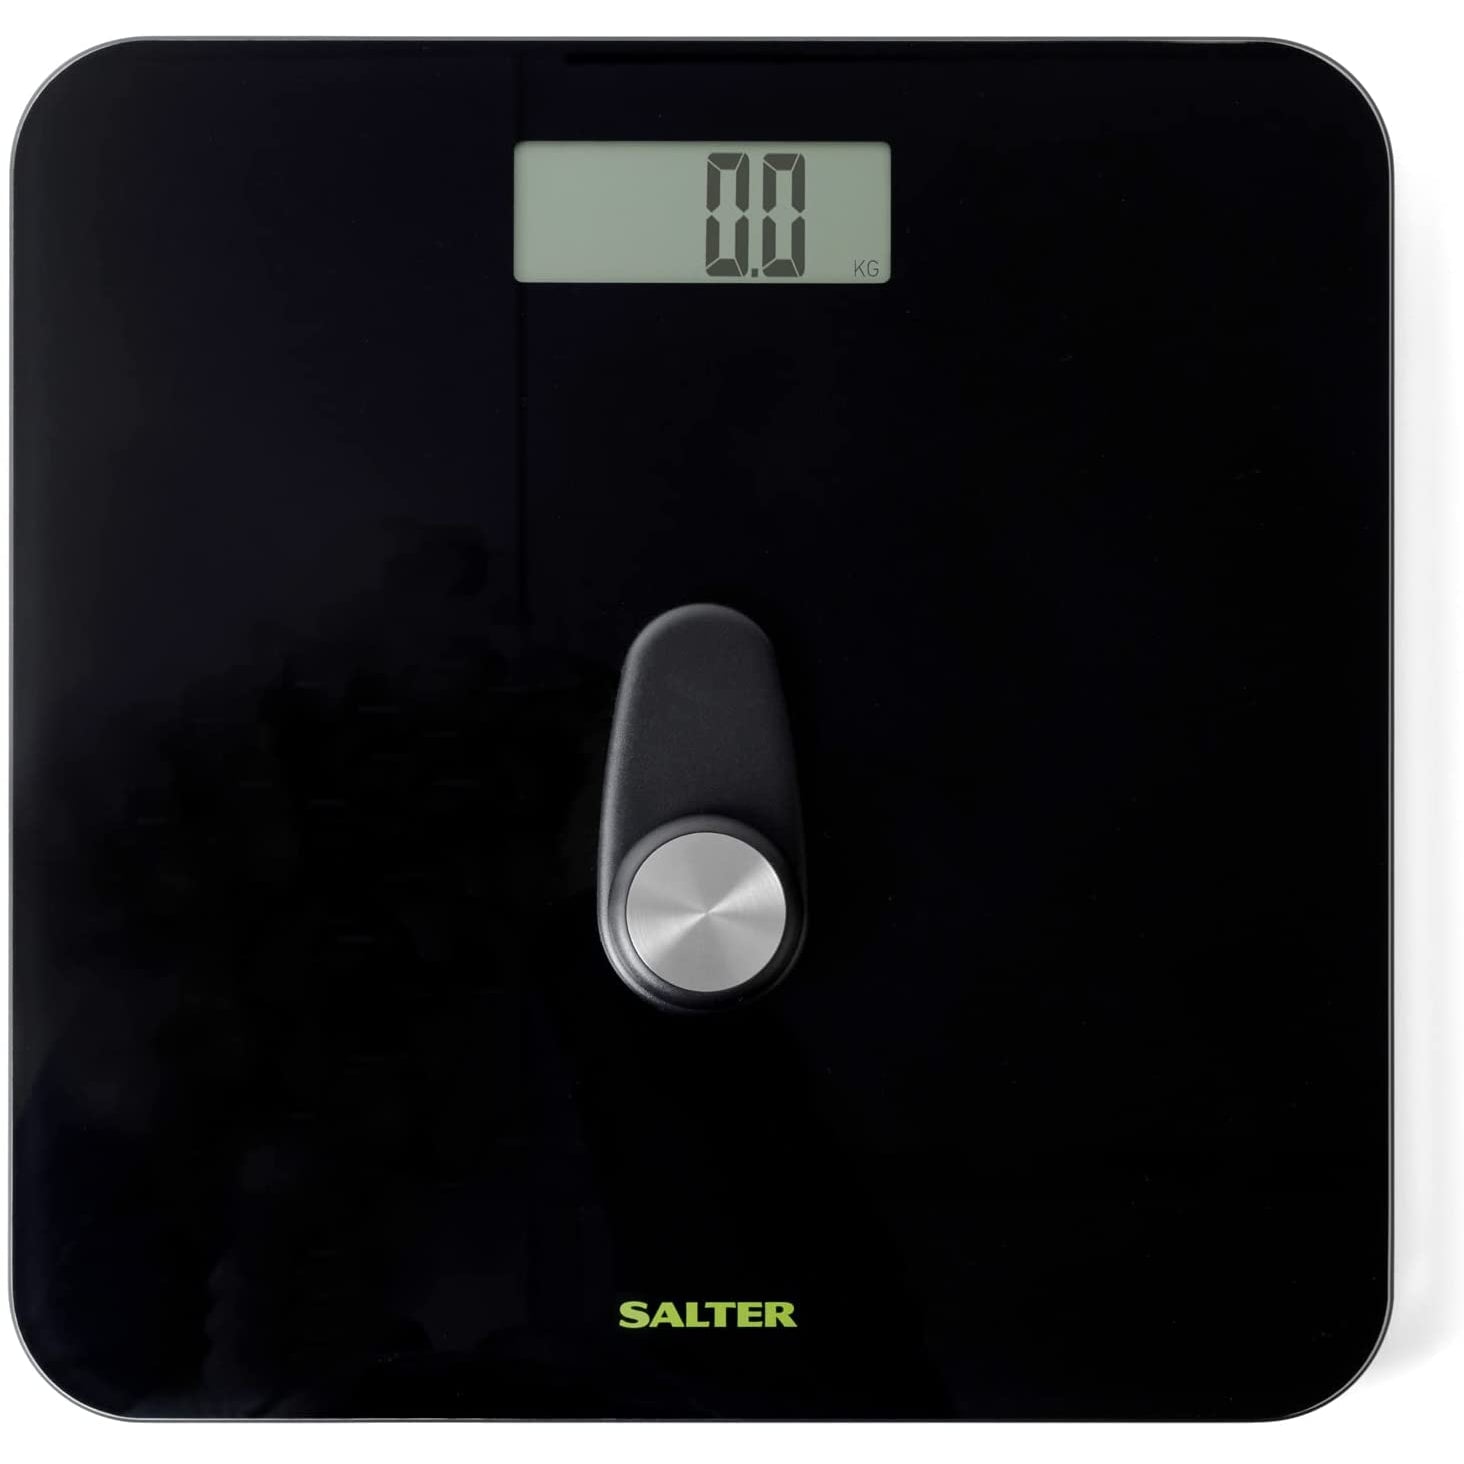 Salter Eco Push-To-Power Digital Bathroom Scale - Black